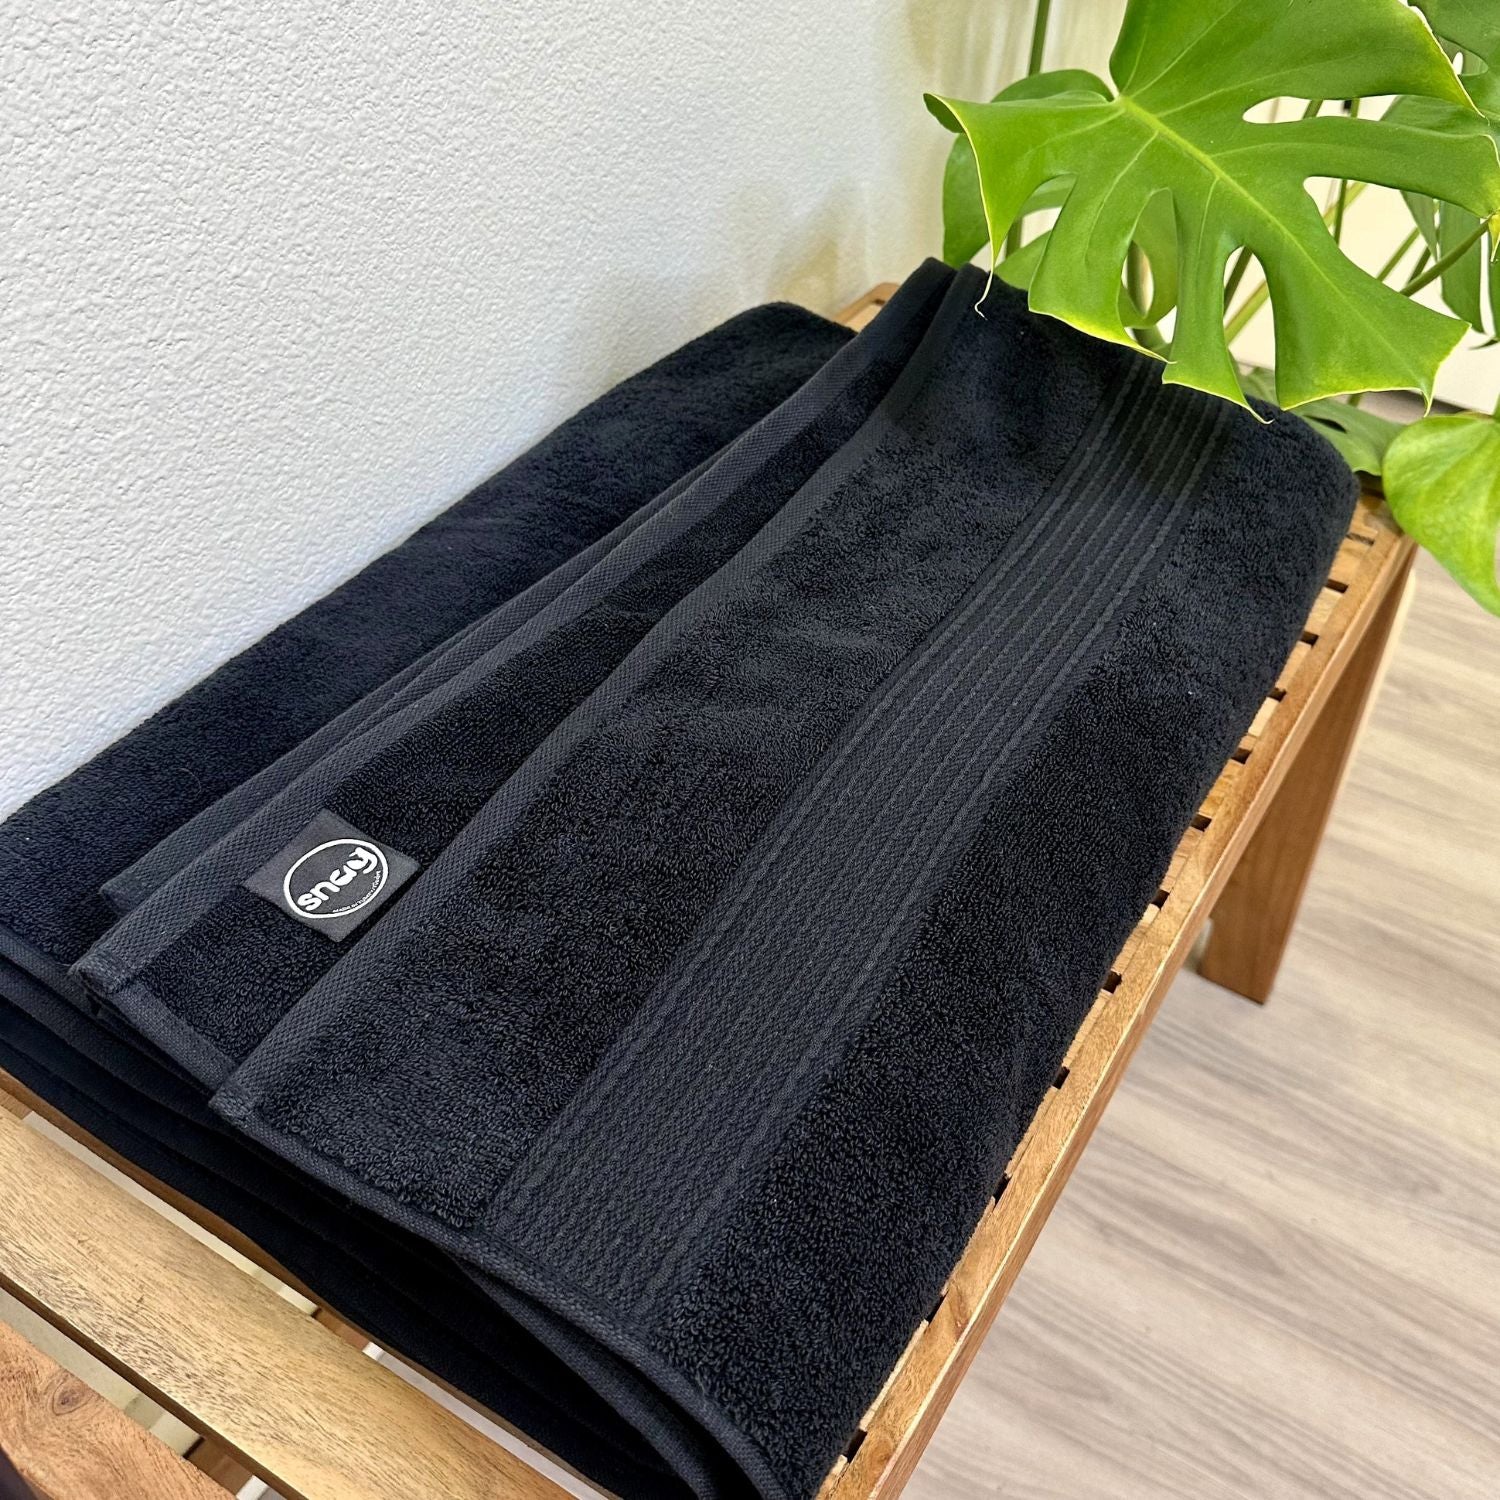 Big Softee Towel - Black